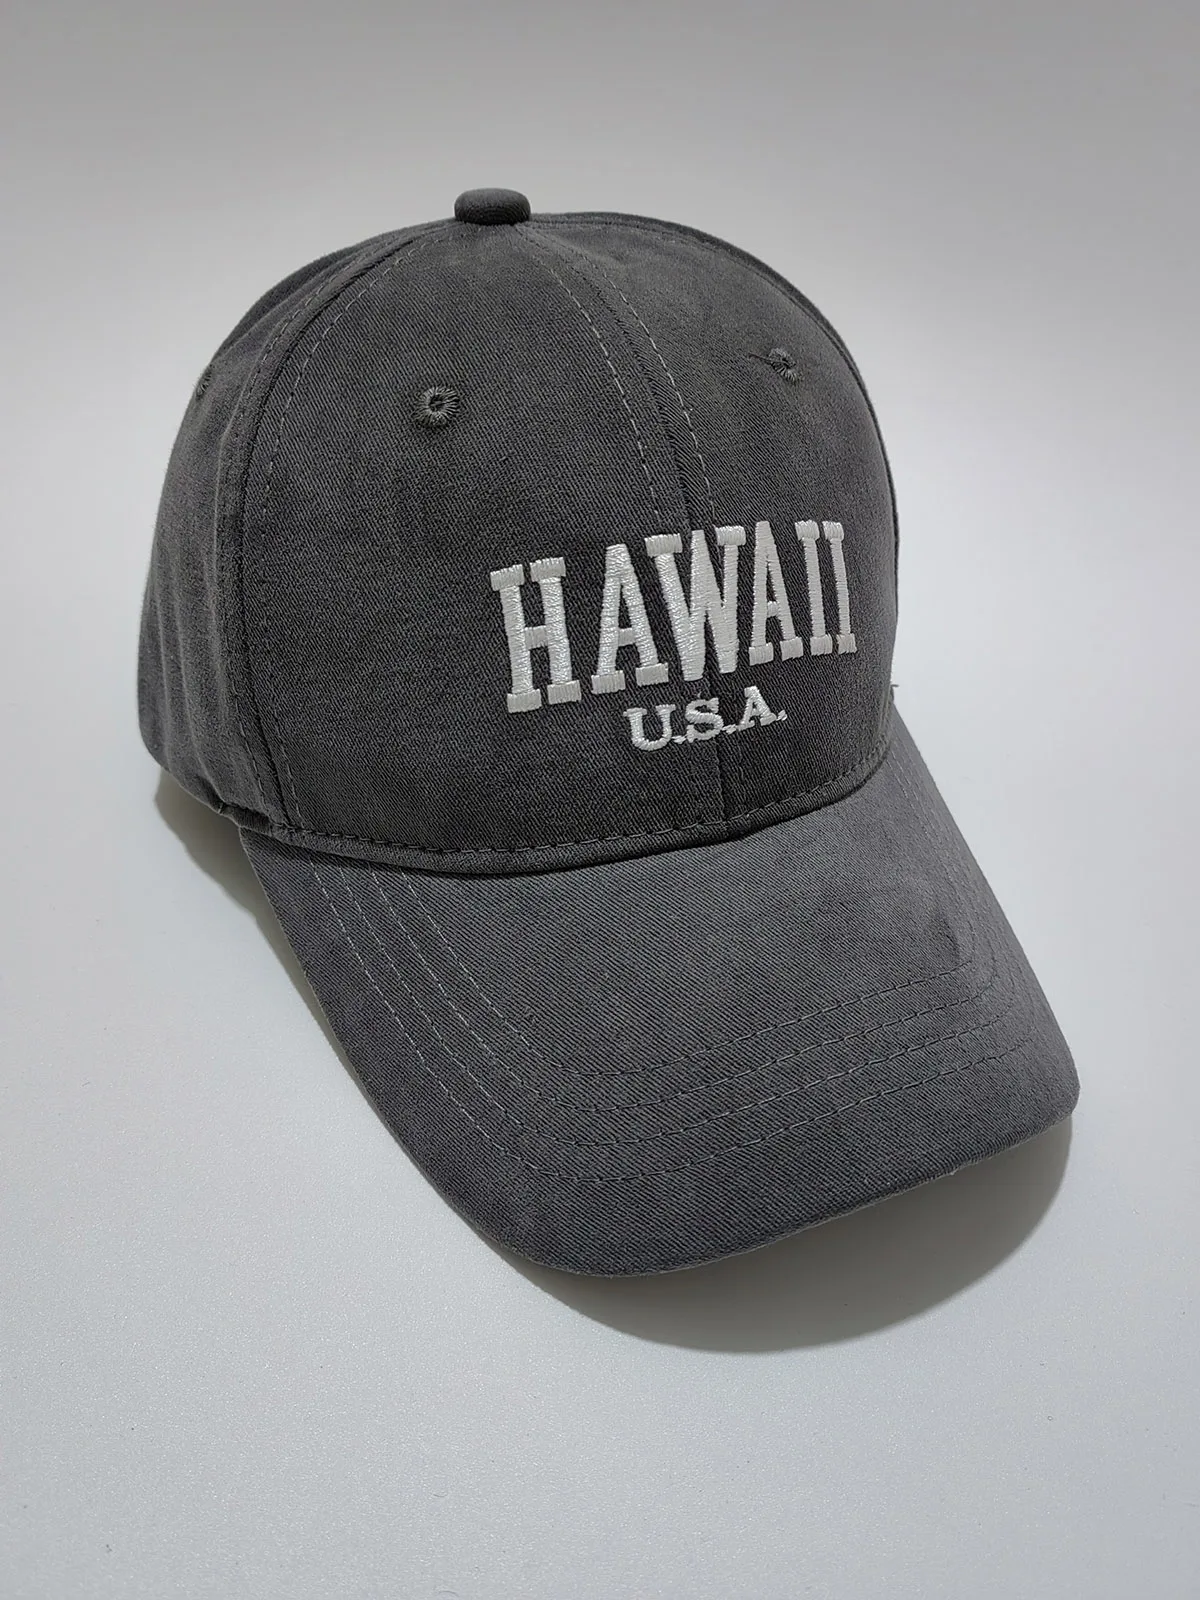 Retro Baseball Cap For Men And Women Fashion Cotton Hawaii Embroidery Snapback Hat Spring Autumn Sun Visors Cap Lover Unisex